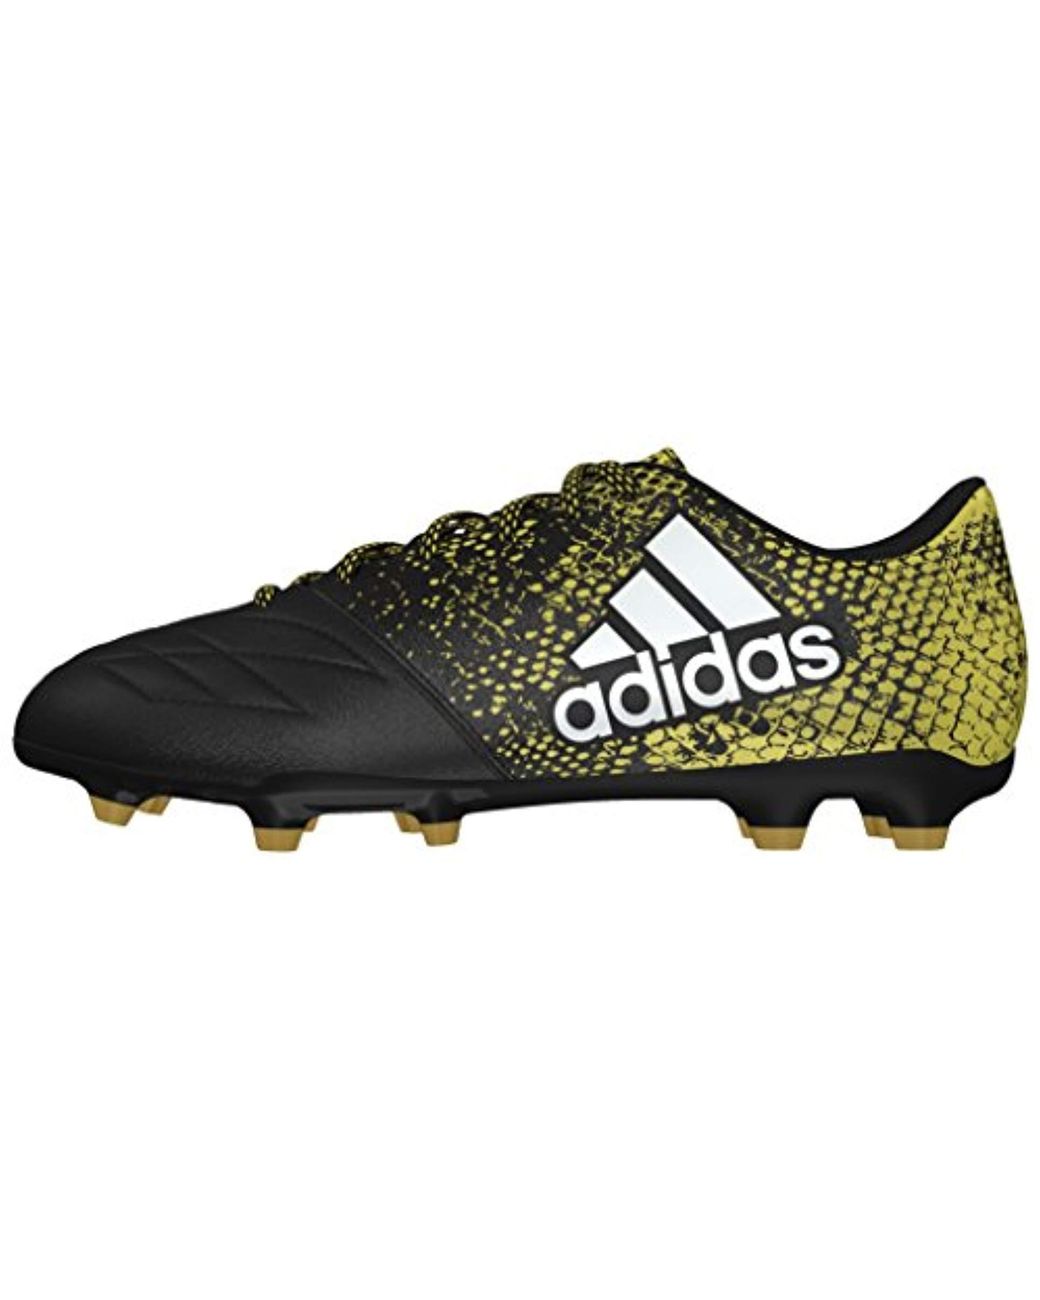 Adidas X 163 Fg Football Boots Mens